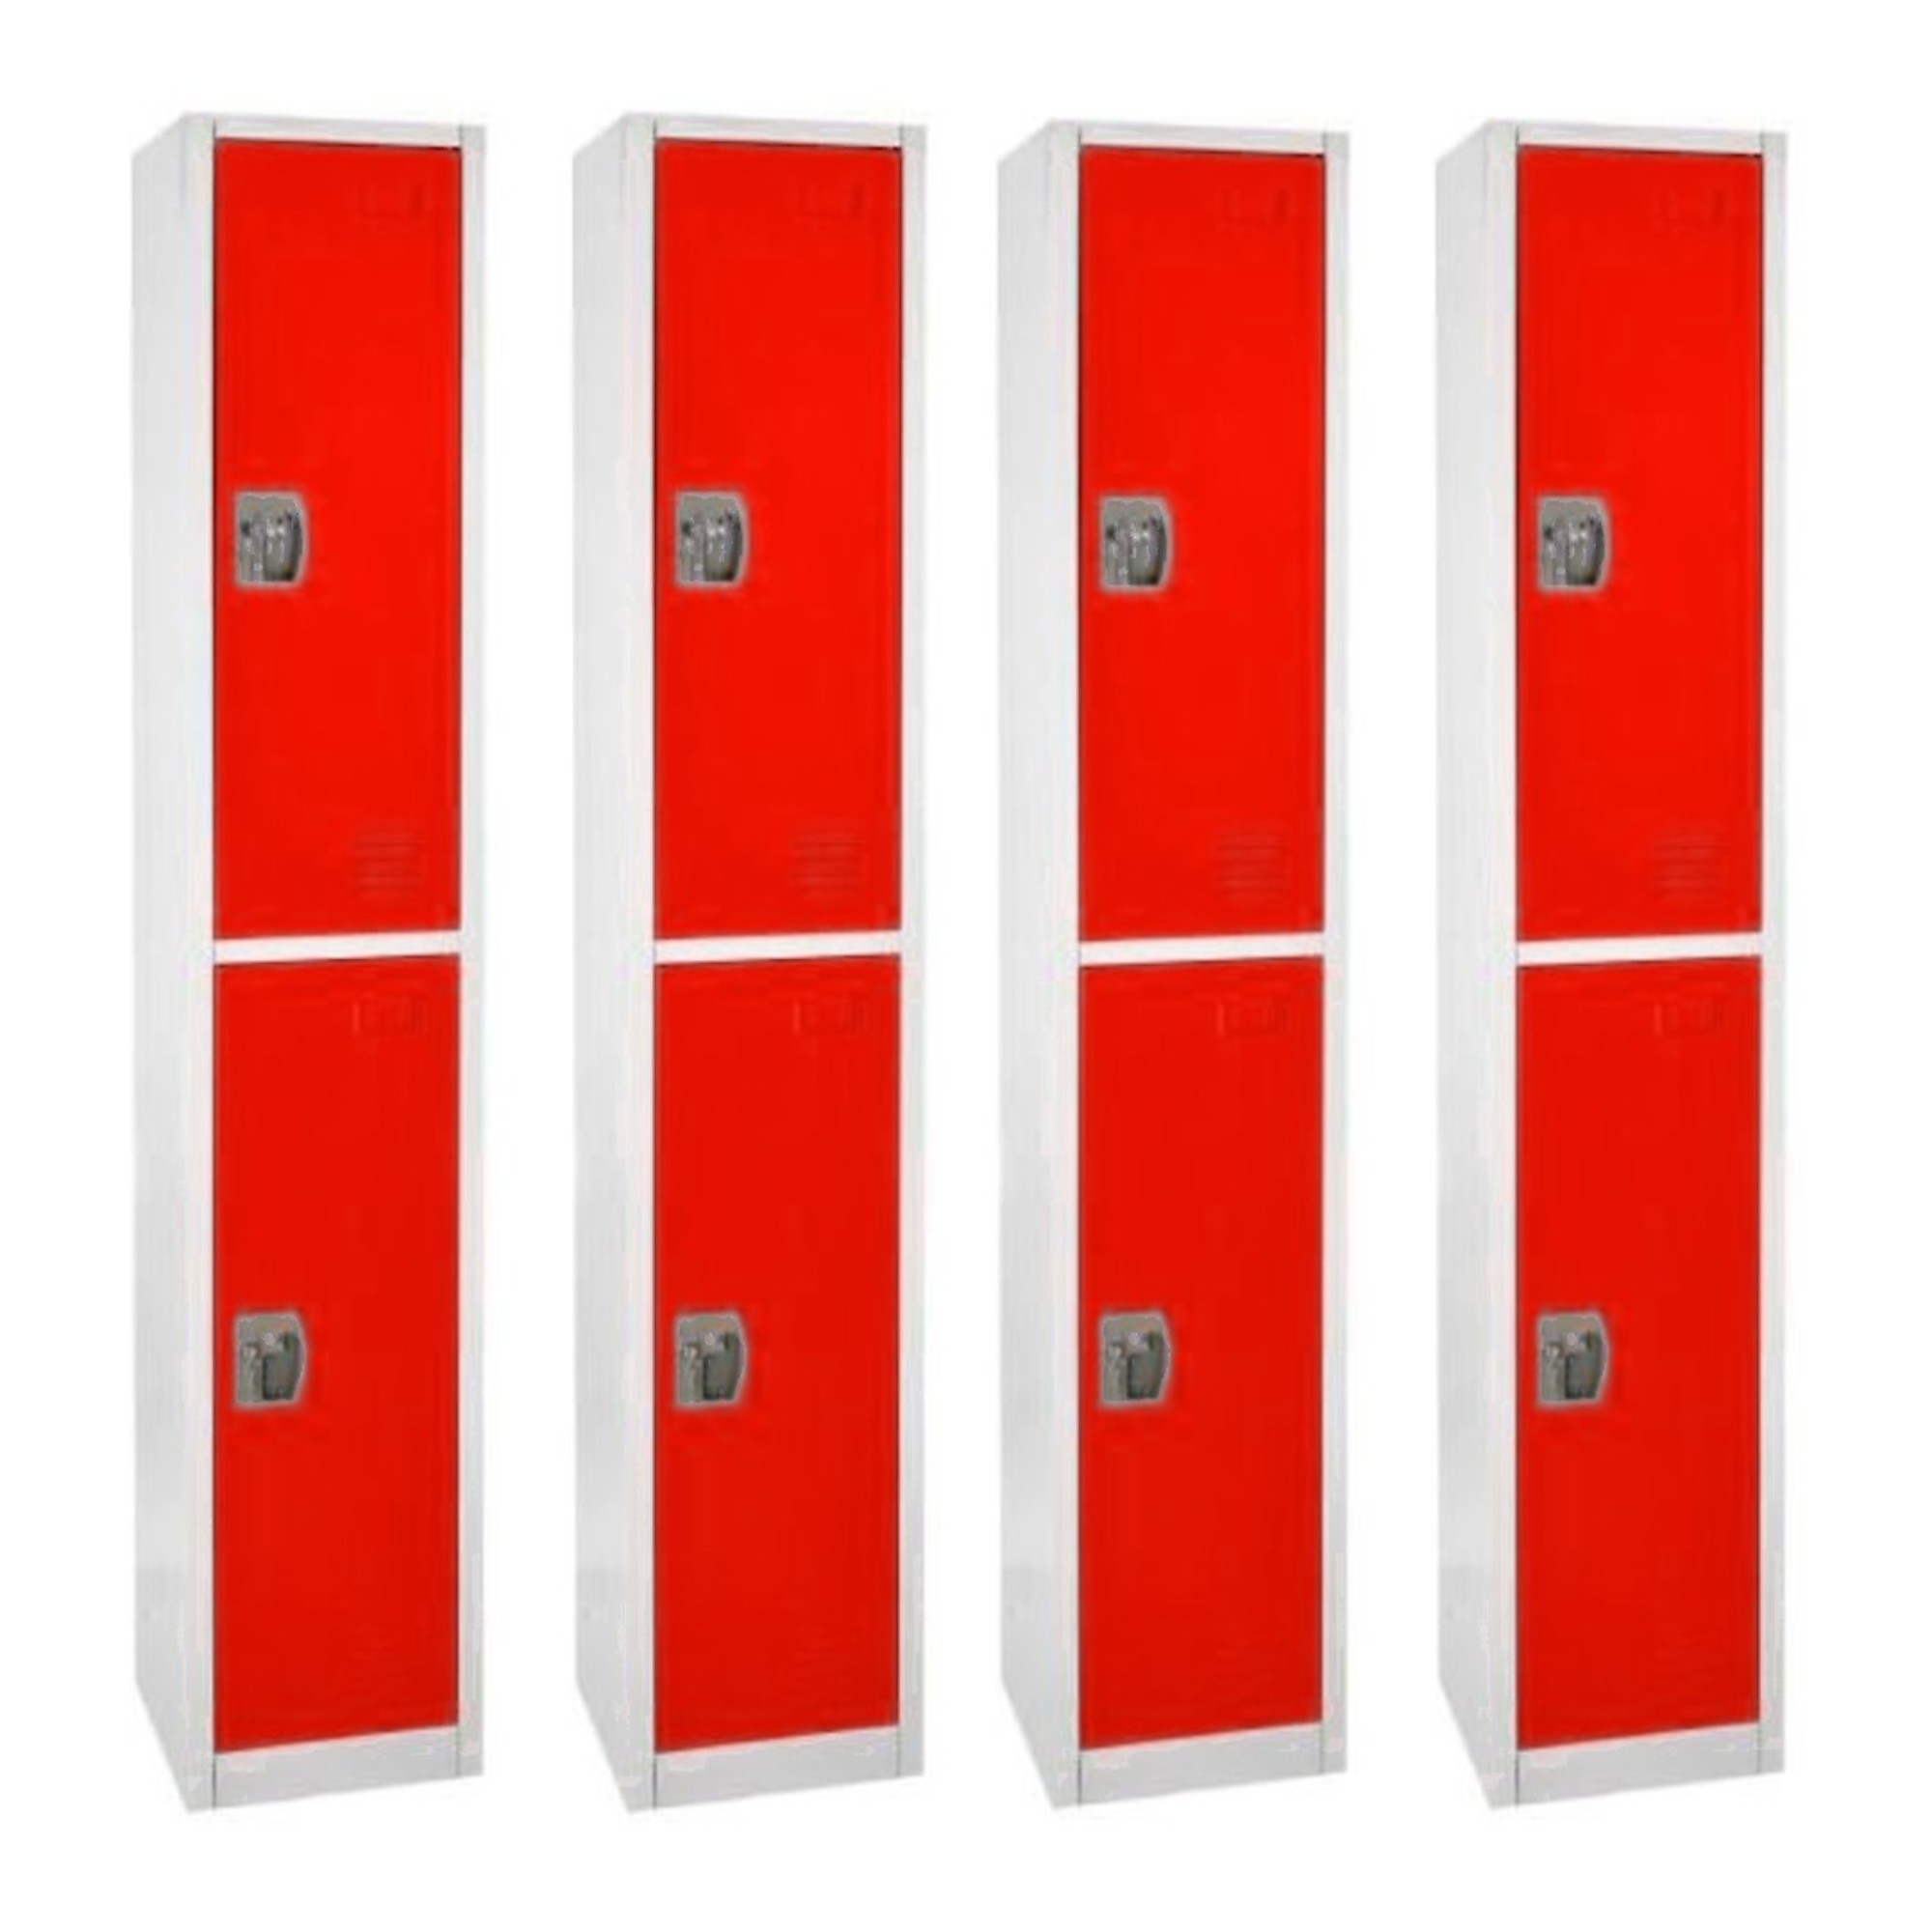 Alpine, 72Inch H 2-Tier Steel Storage Locker, Red, 4-Pack, Height 72 in, Width 12 in, Color Red, Model ADI629-202-RED-4PK